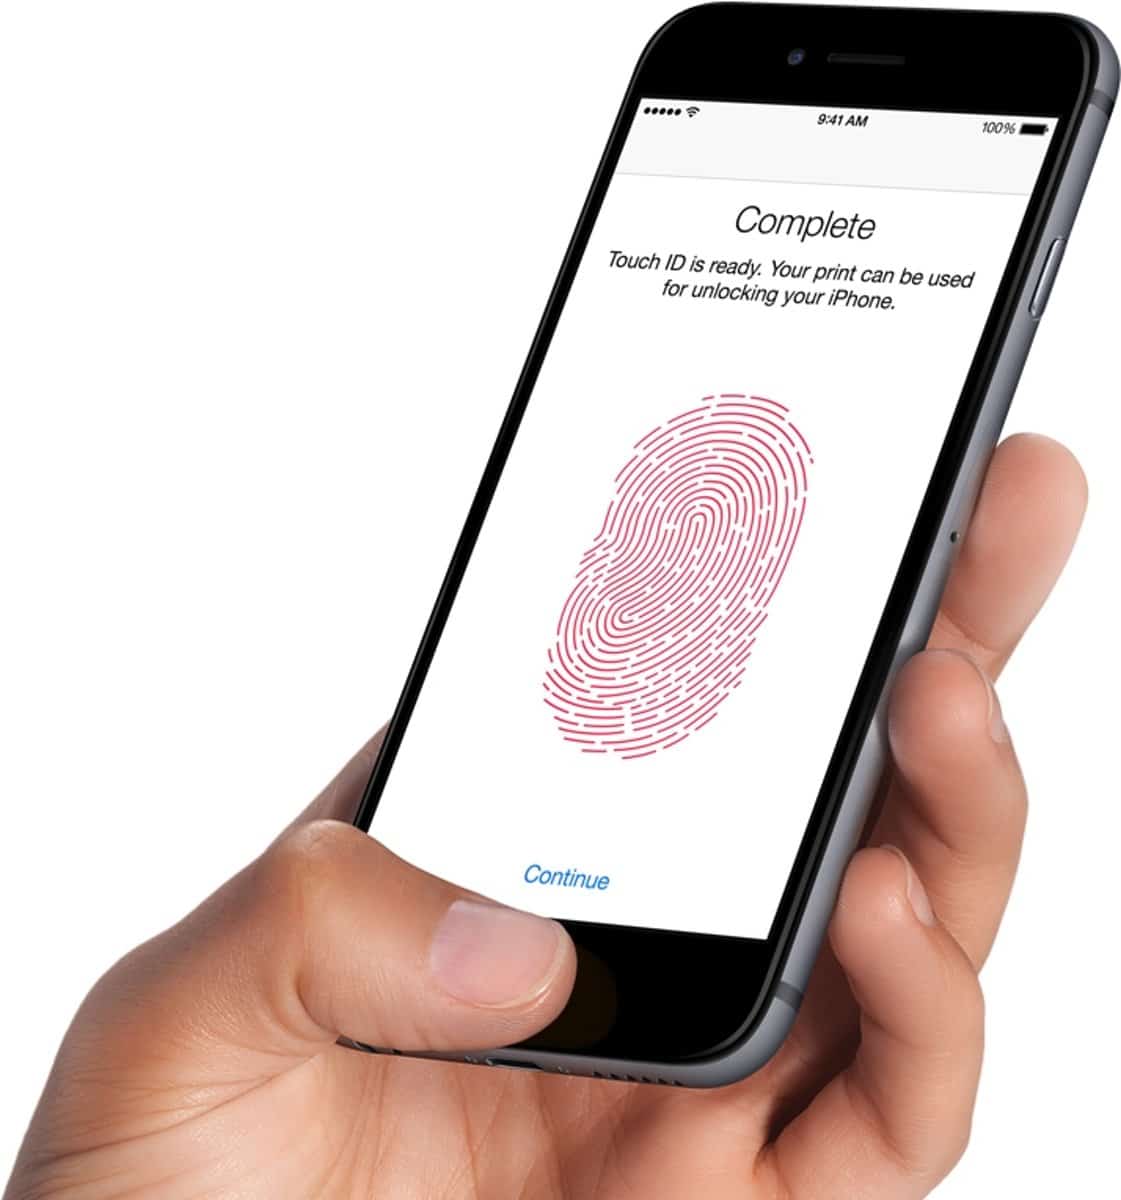 fbi try to unlock suspect iphone with dead body fingerprint 01